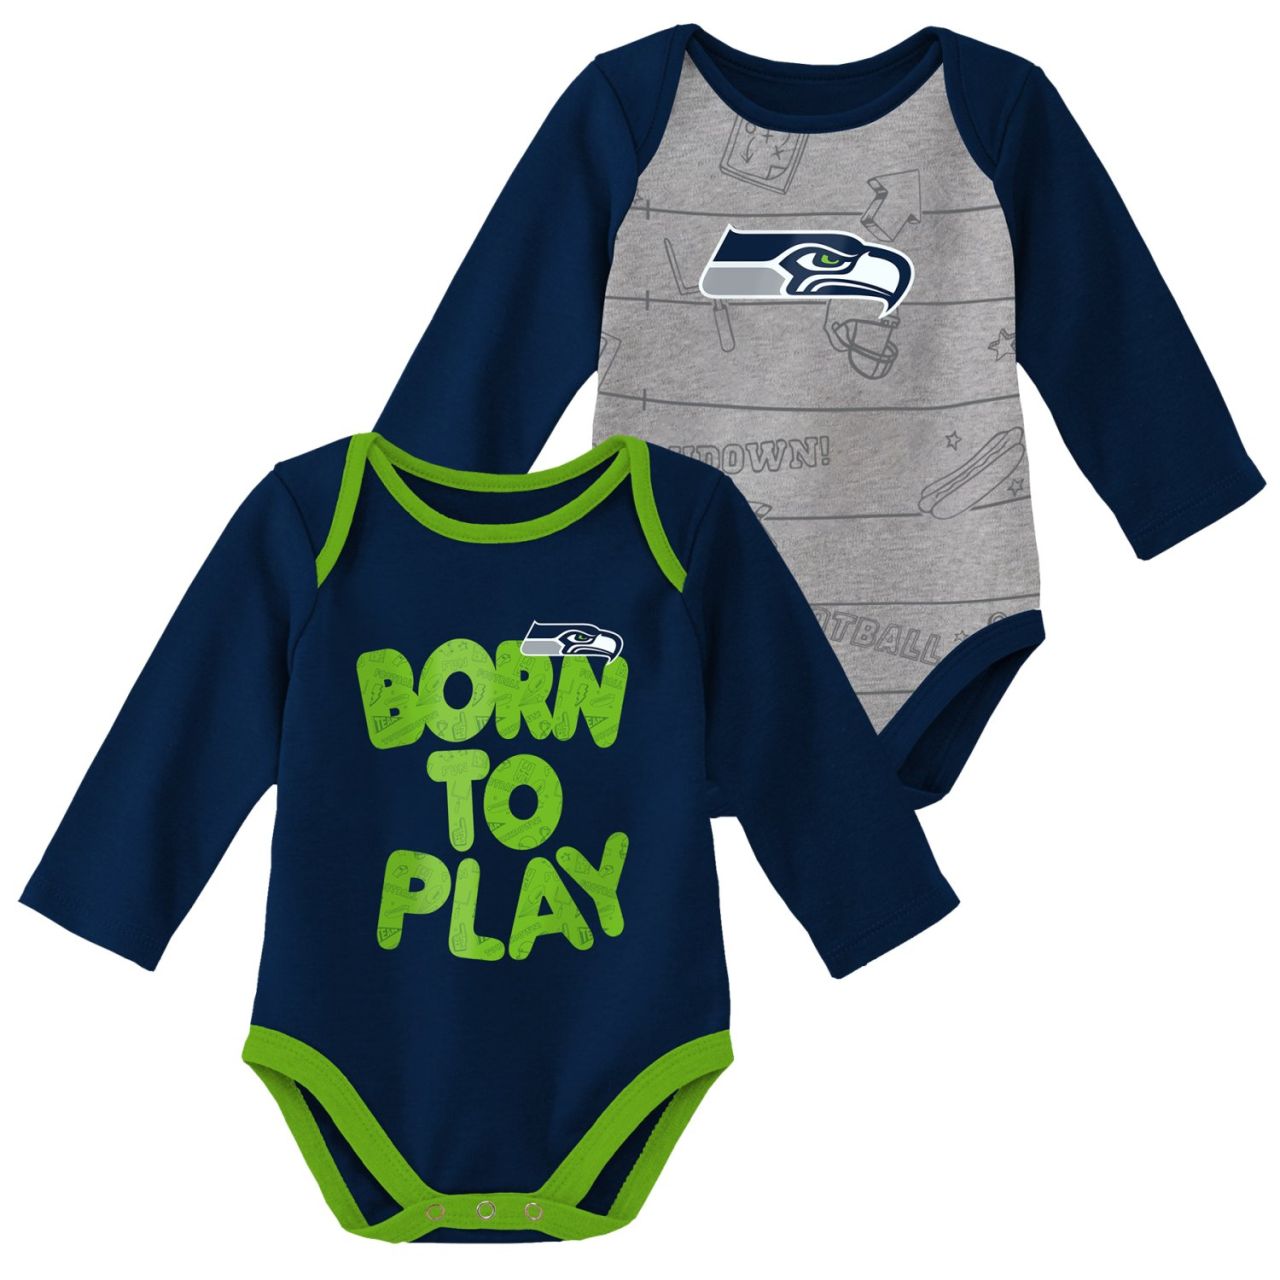 Outerstuff NFL Baby 2er Body-Set Seattle Seahawks von Outerstuff